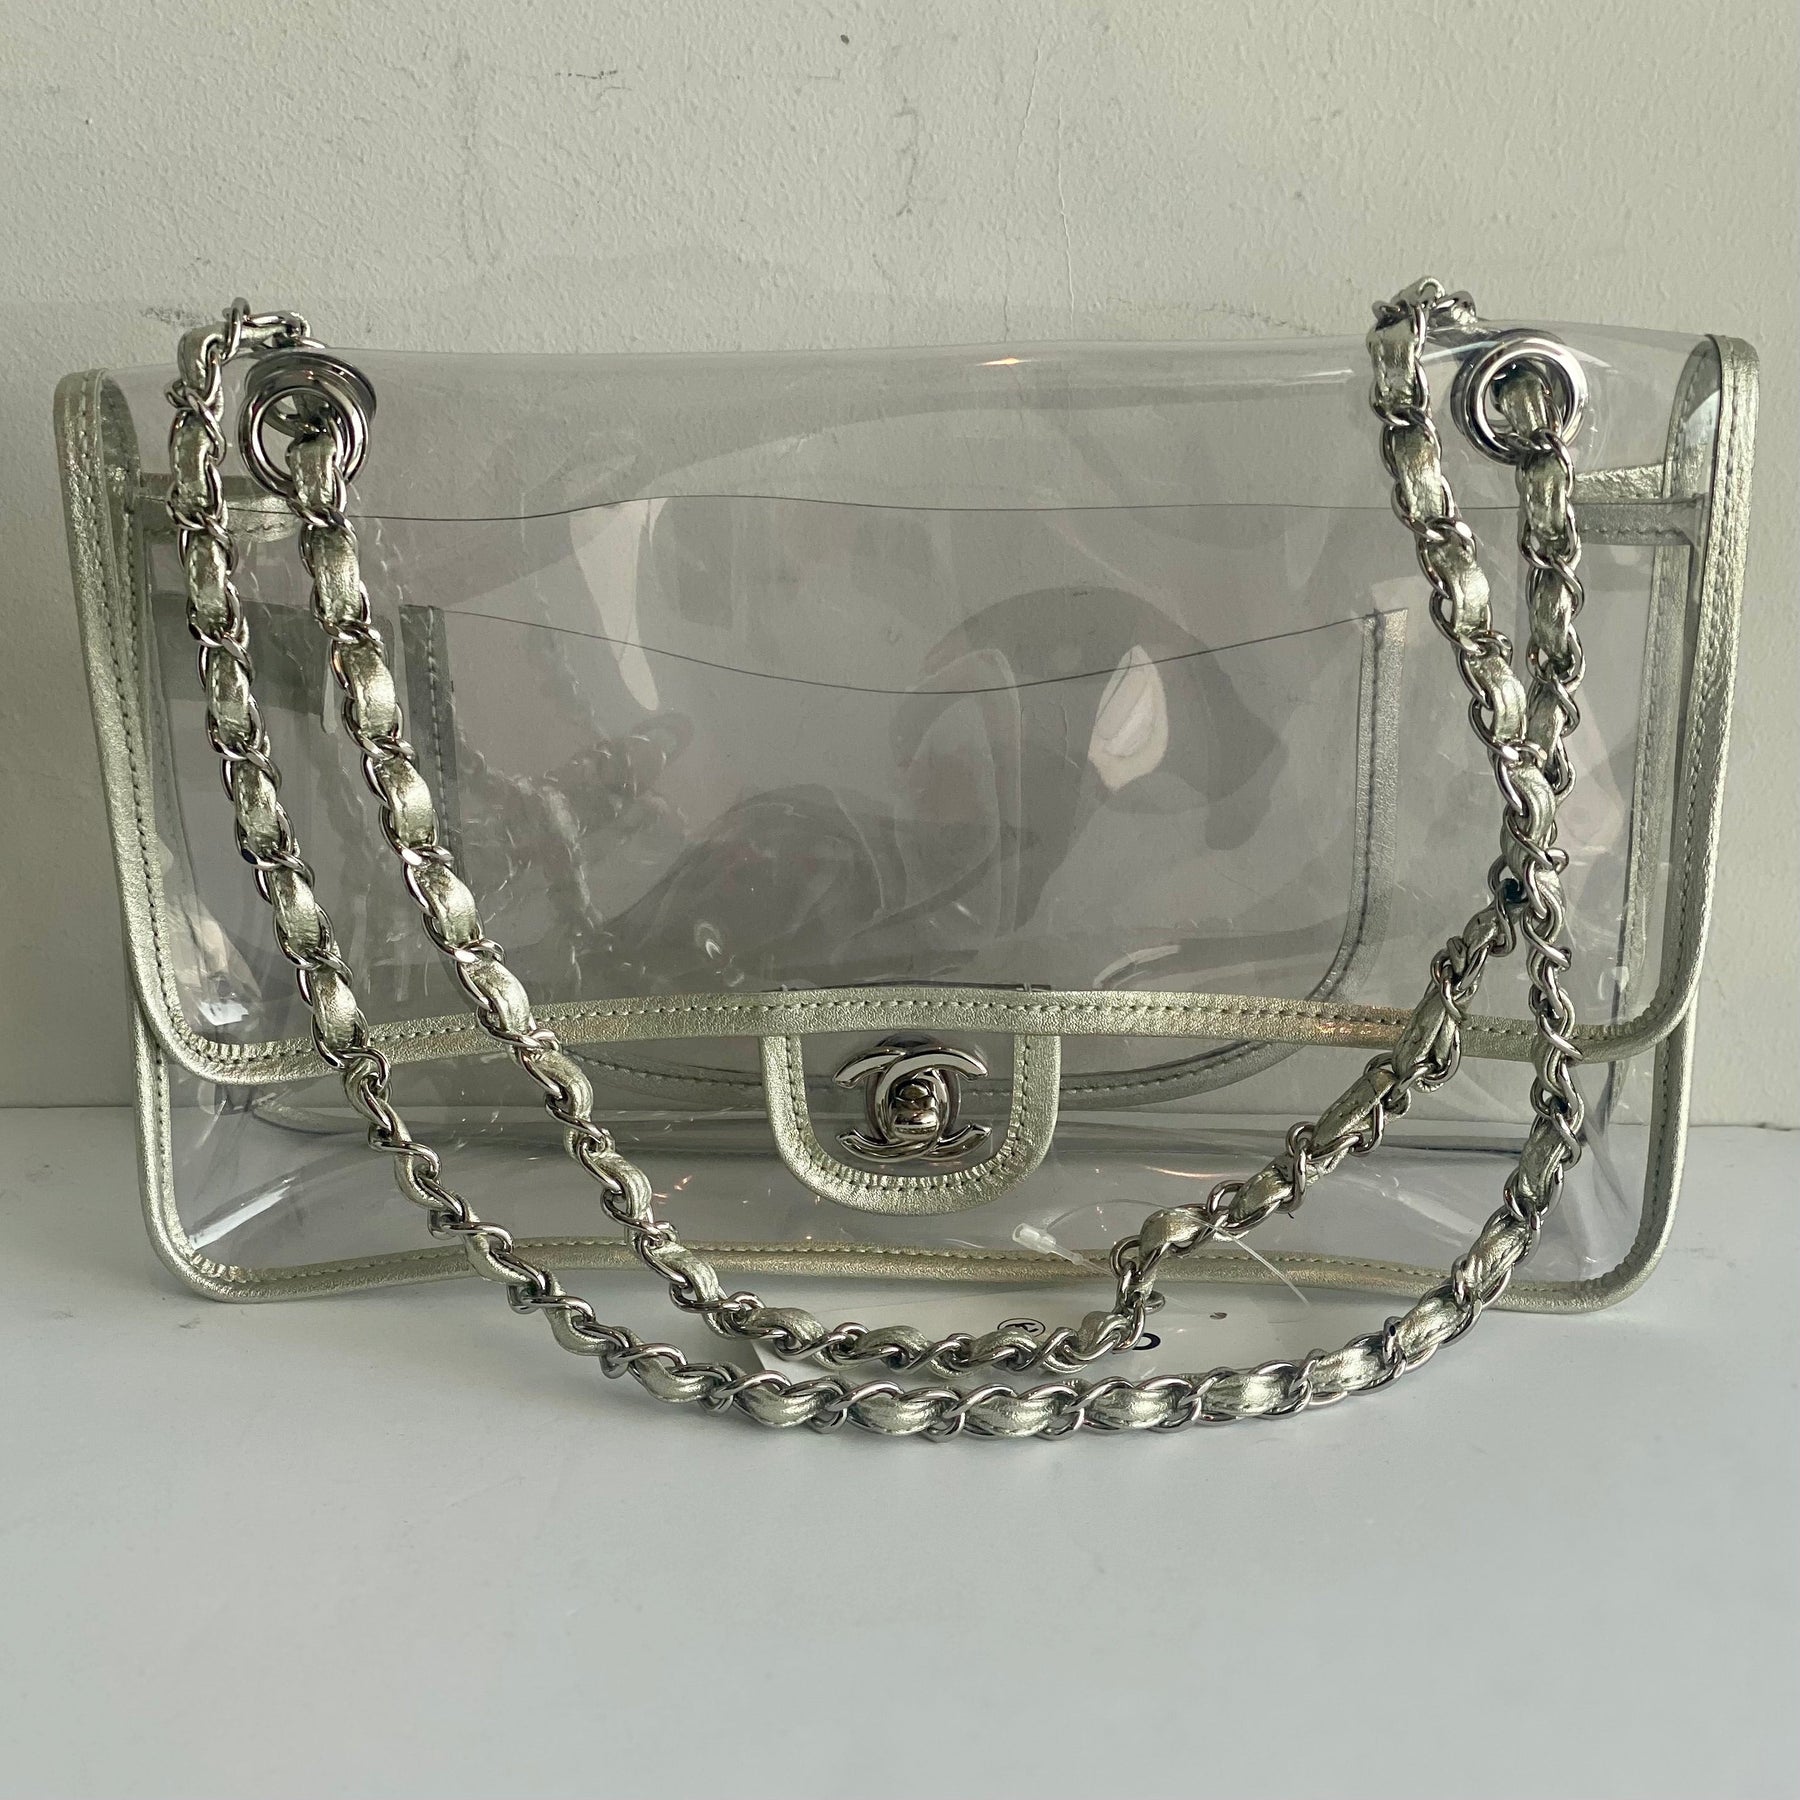 Chanel Clear 2.55 Reissue Transparent Classic Single Flap Shoulder Bag Front